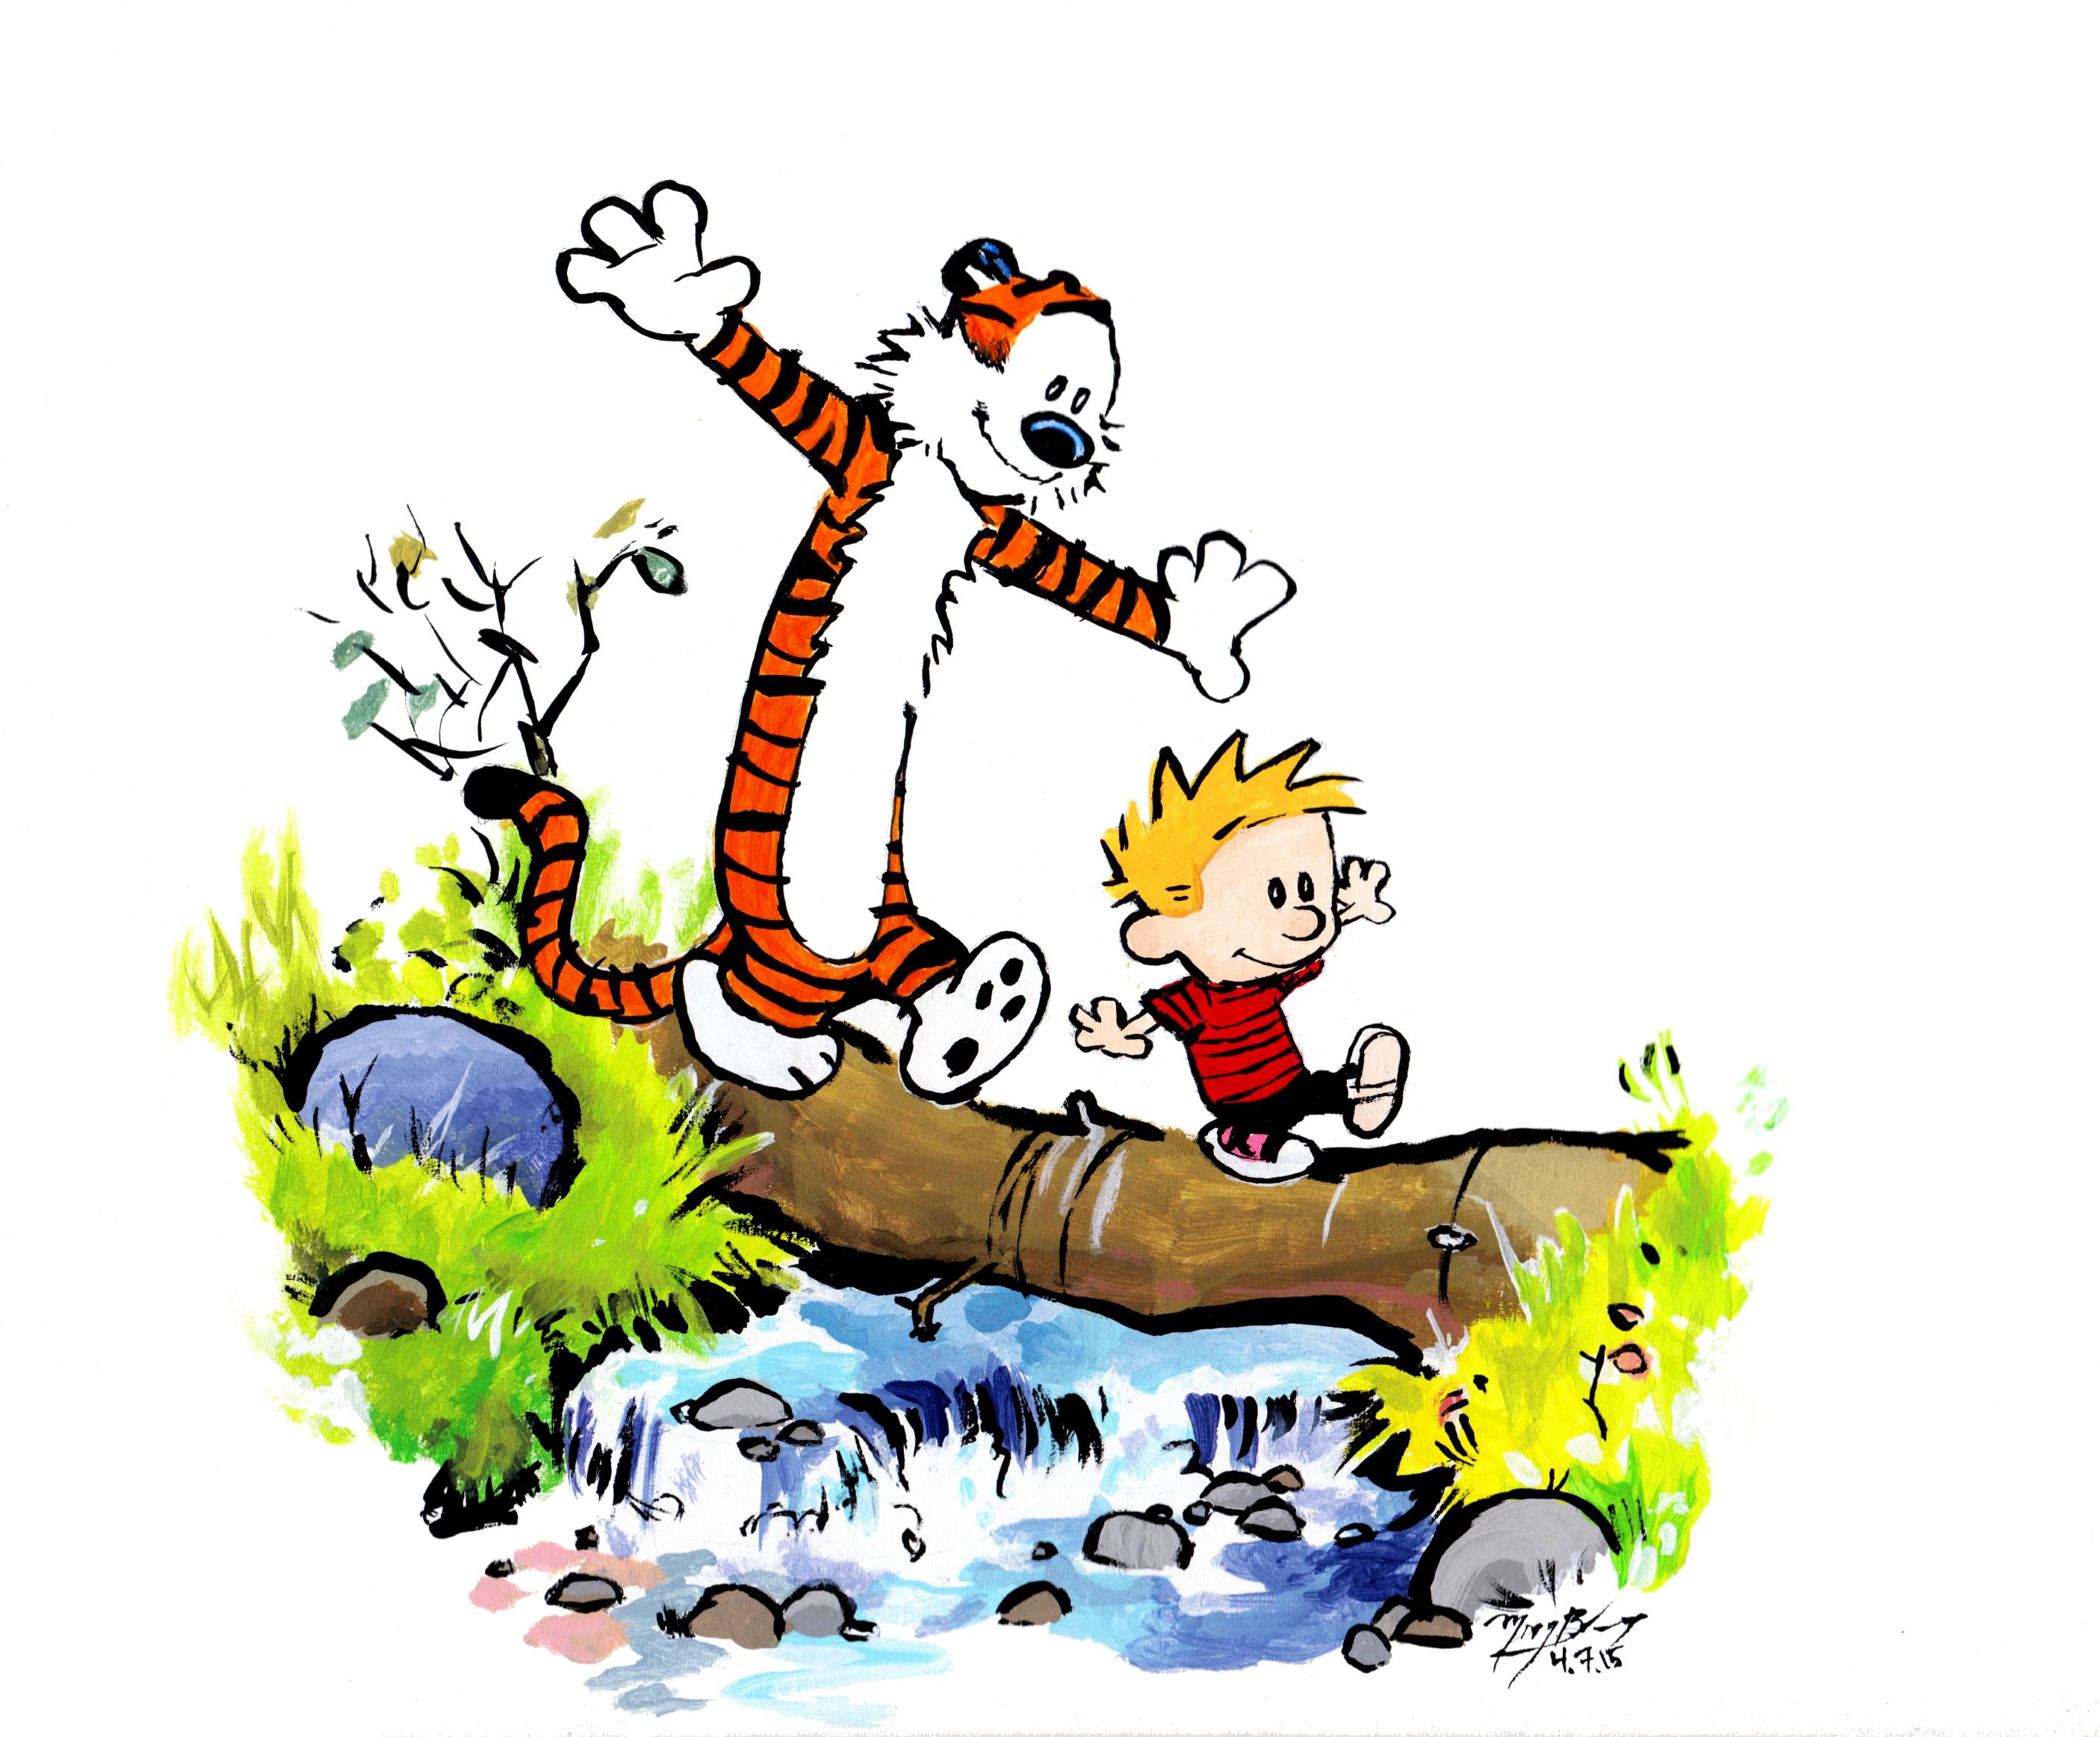 The cartoon characters Calvin & Hobbes 